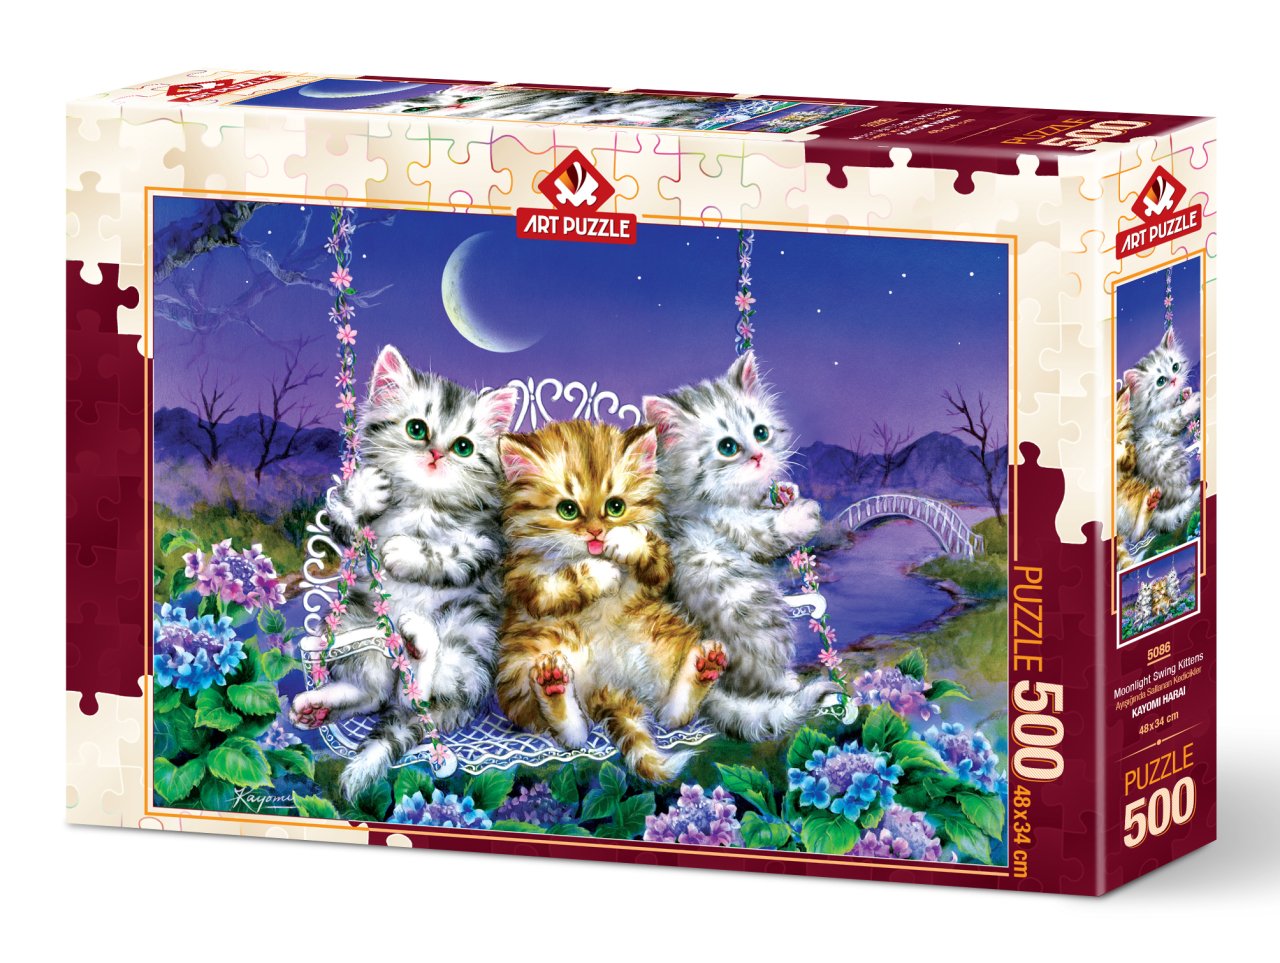 Art Puzzle - Moonlight Swing Kittens - 500 Piece Jigsaw Puzzle